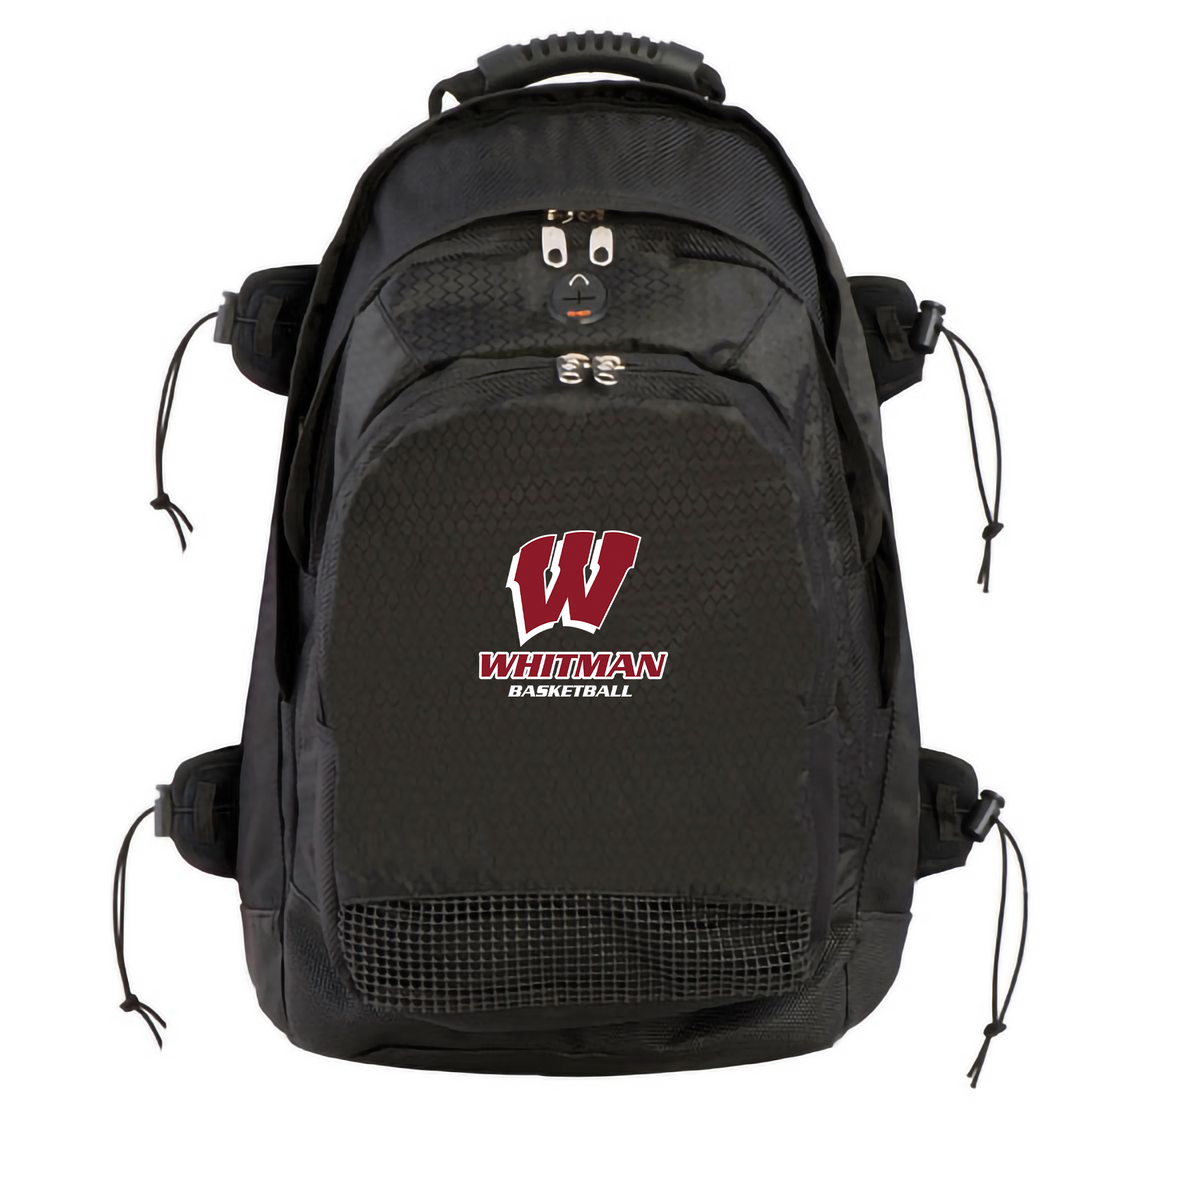 Whitman Basketball Deluxe Sports Backpack